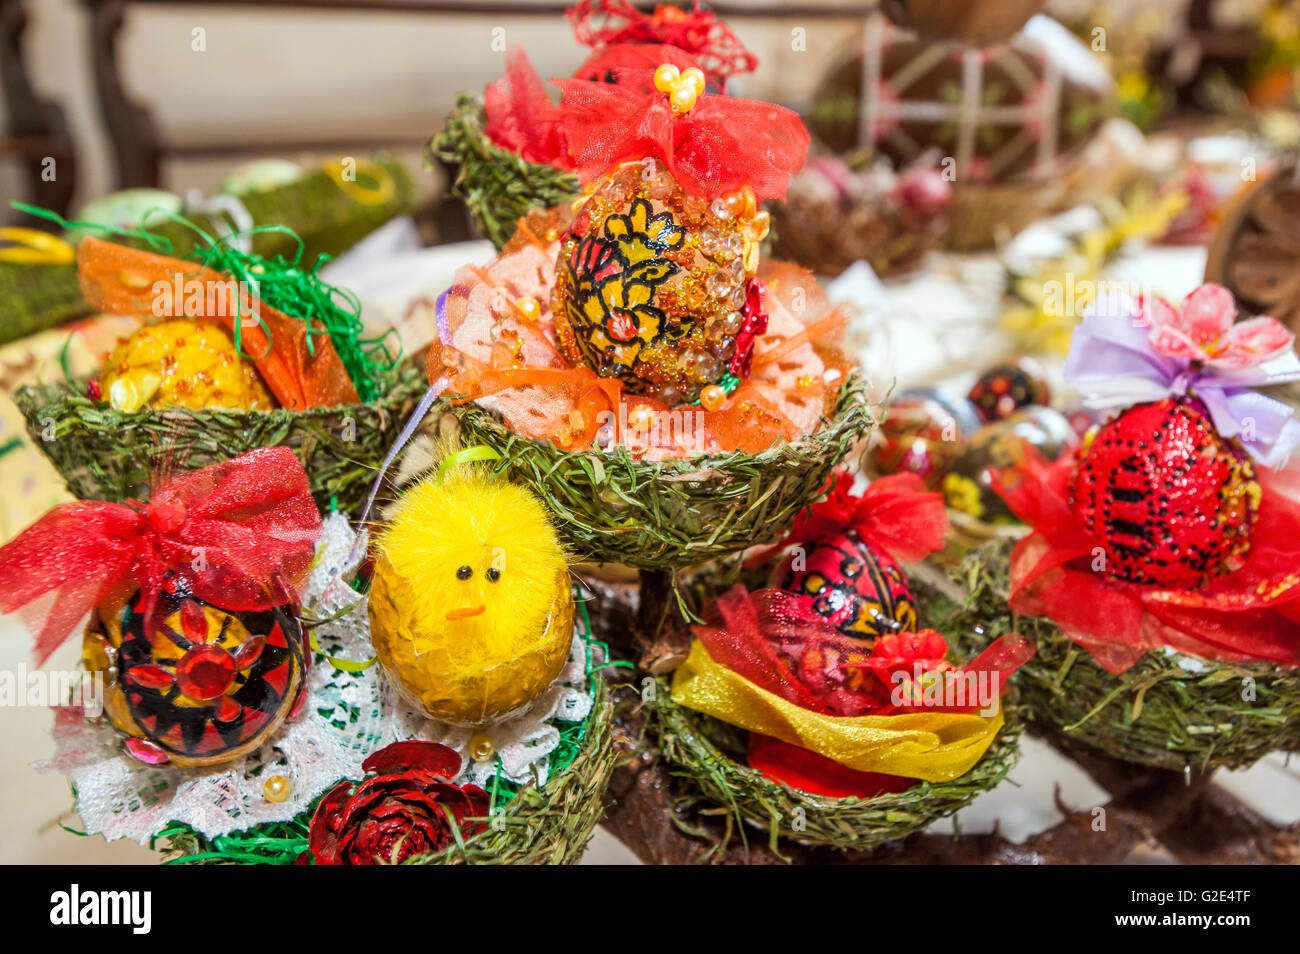 Slovenia LJubljana Exibition of artwork with  Eggs for Easter Stock Photo